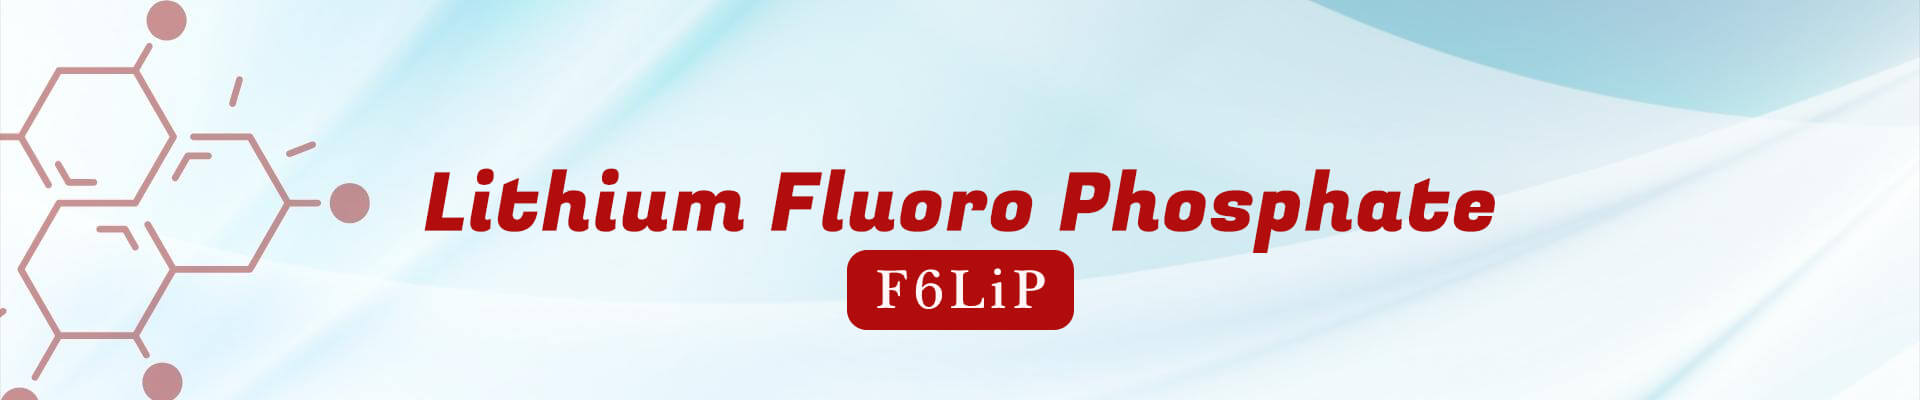 Lithium Fluoro Phosphate